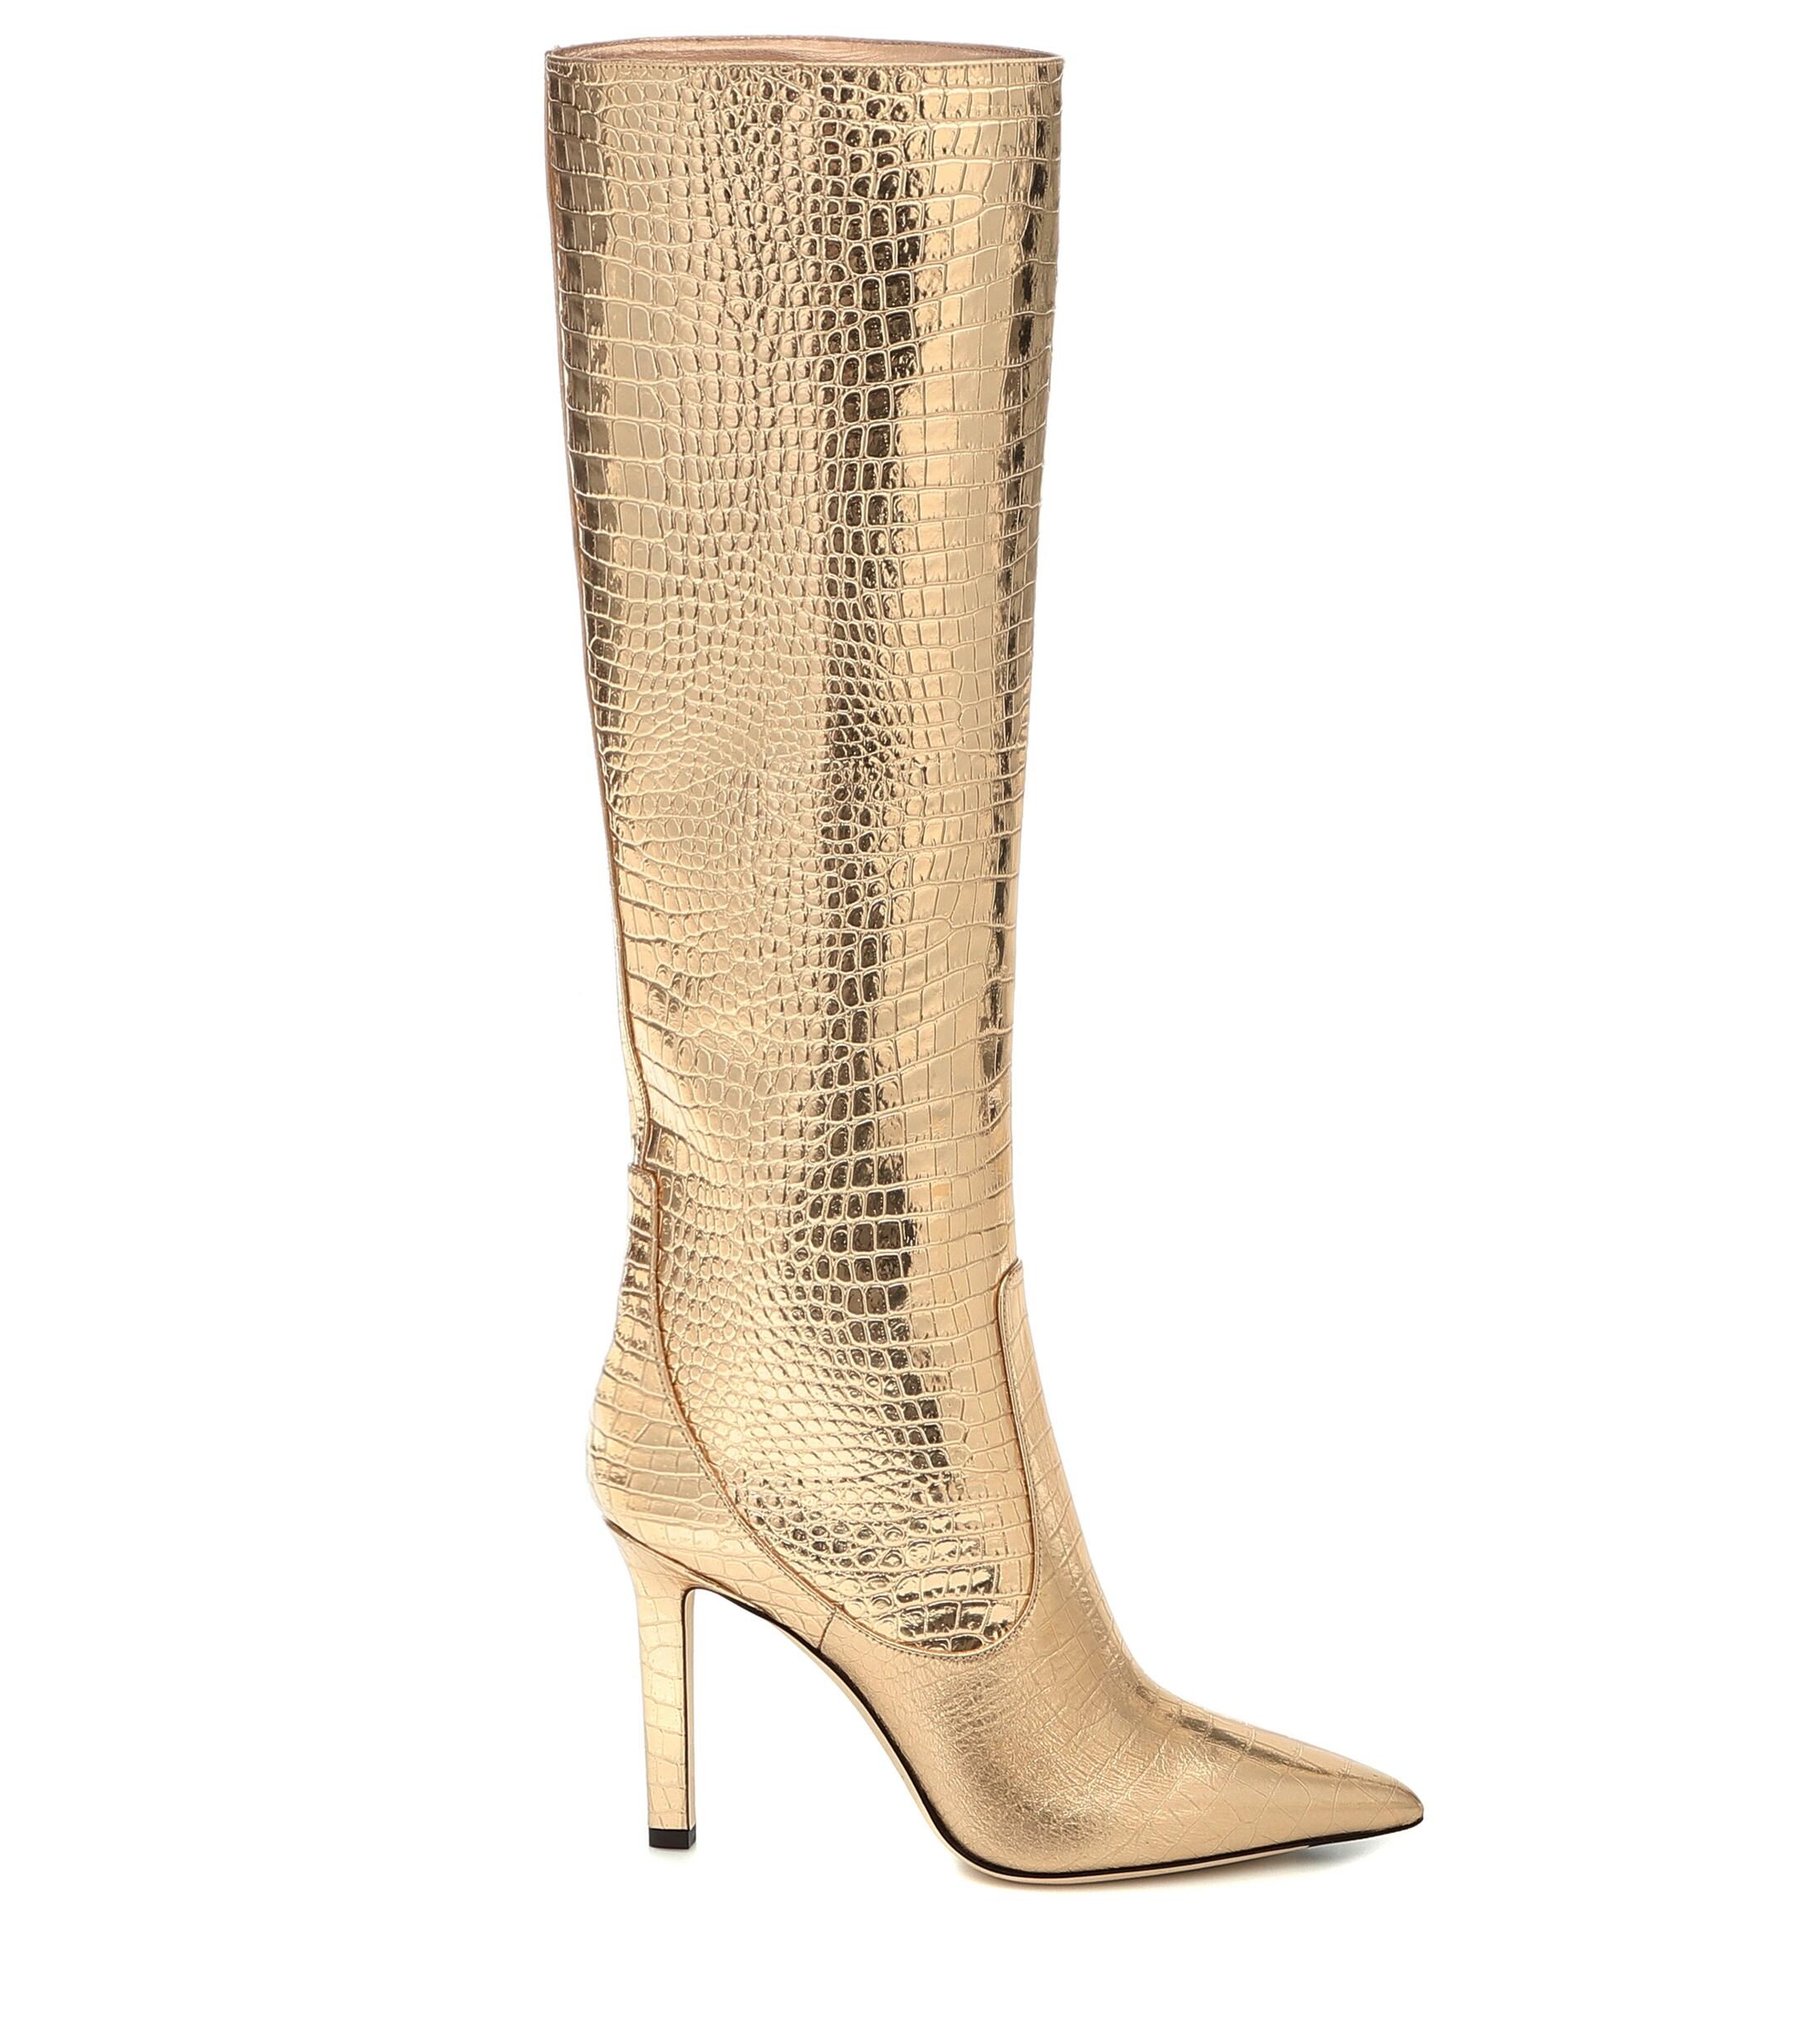 Jimmy Choo Mavis 100 Leather Knee-high Boots in Gold (Metallic) - Lyst